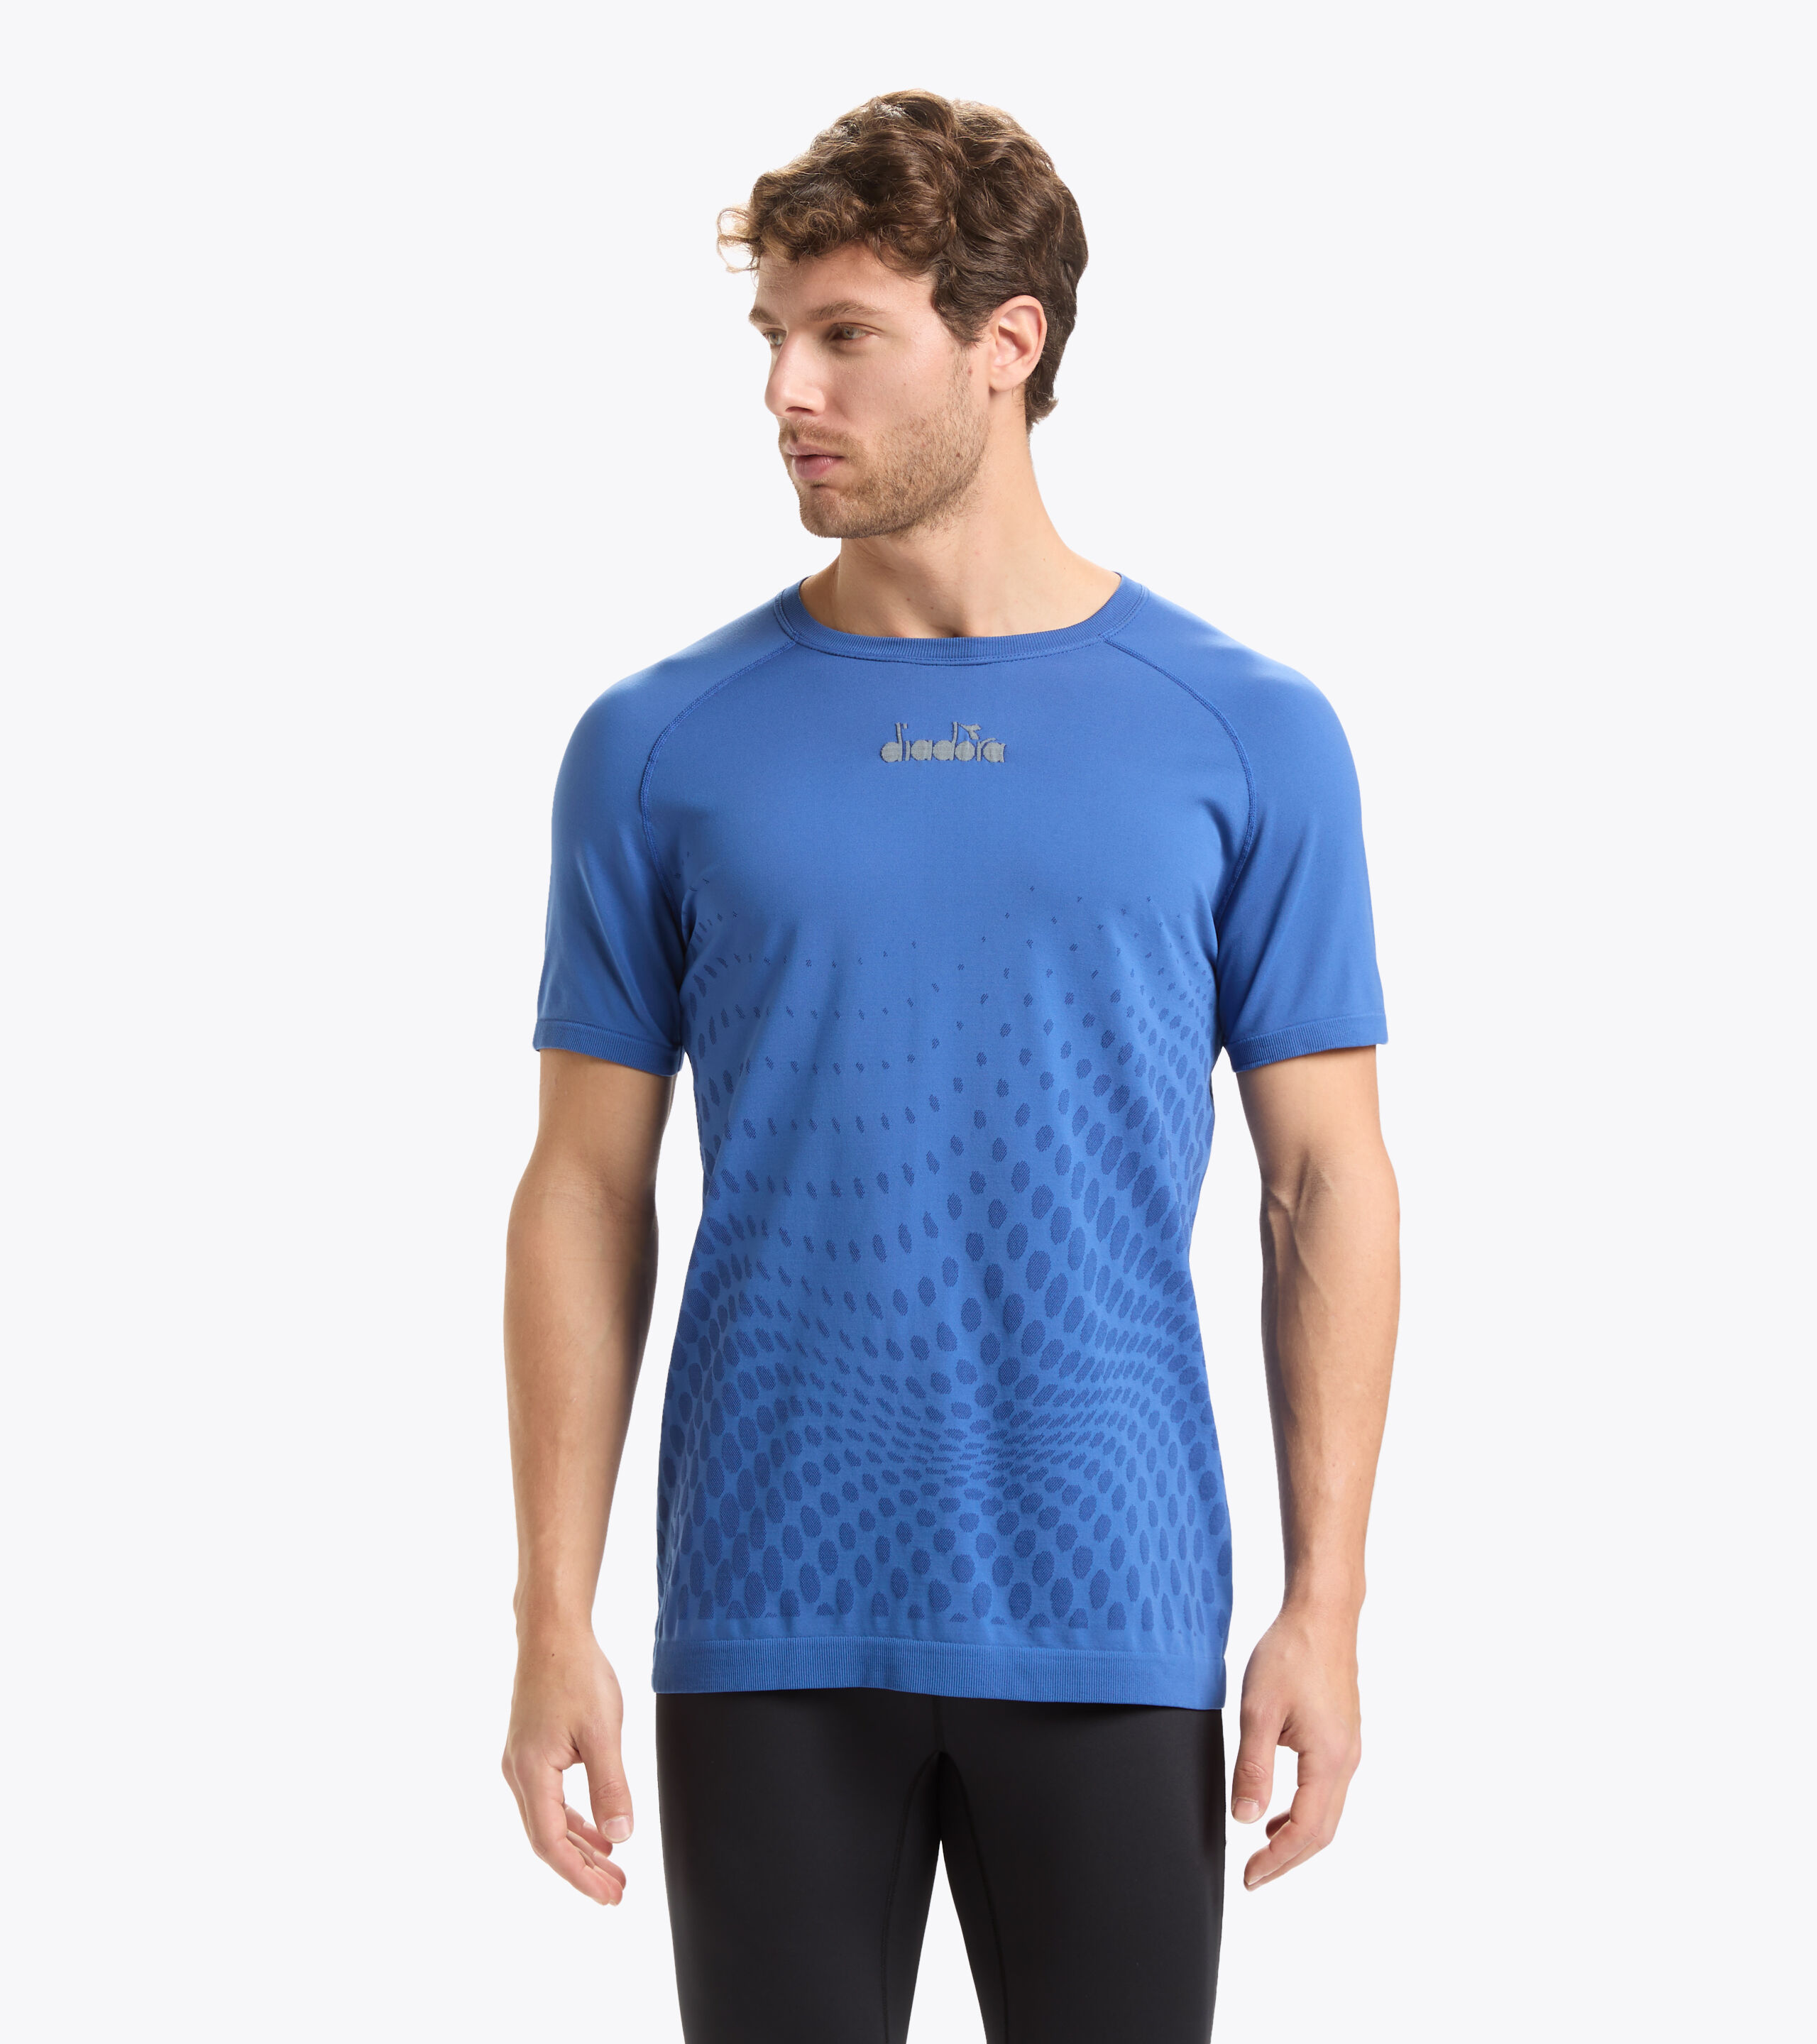 DIADORA Funktions-T-shirt ShortSleeve blau Top Design *50%SALE Topqualität 